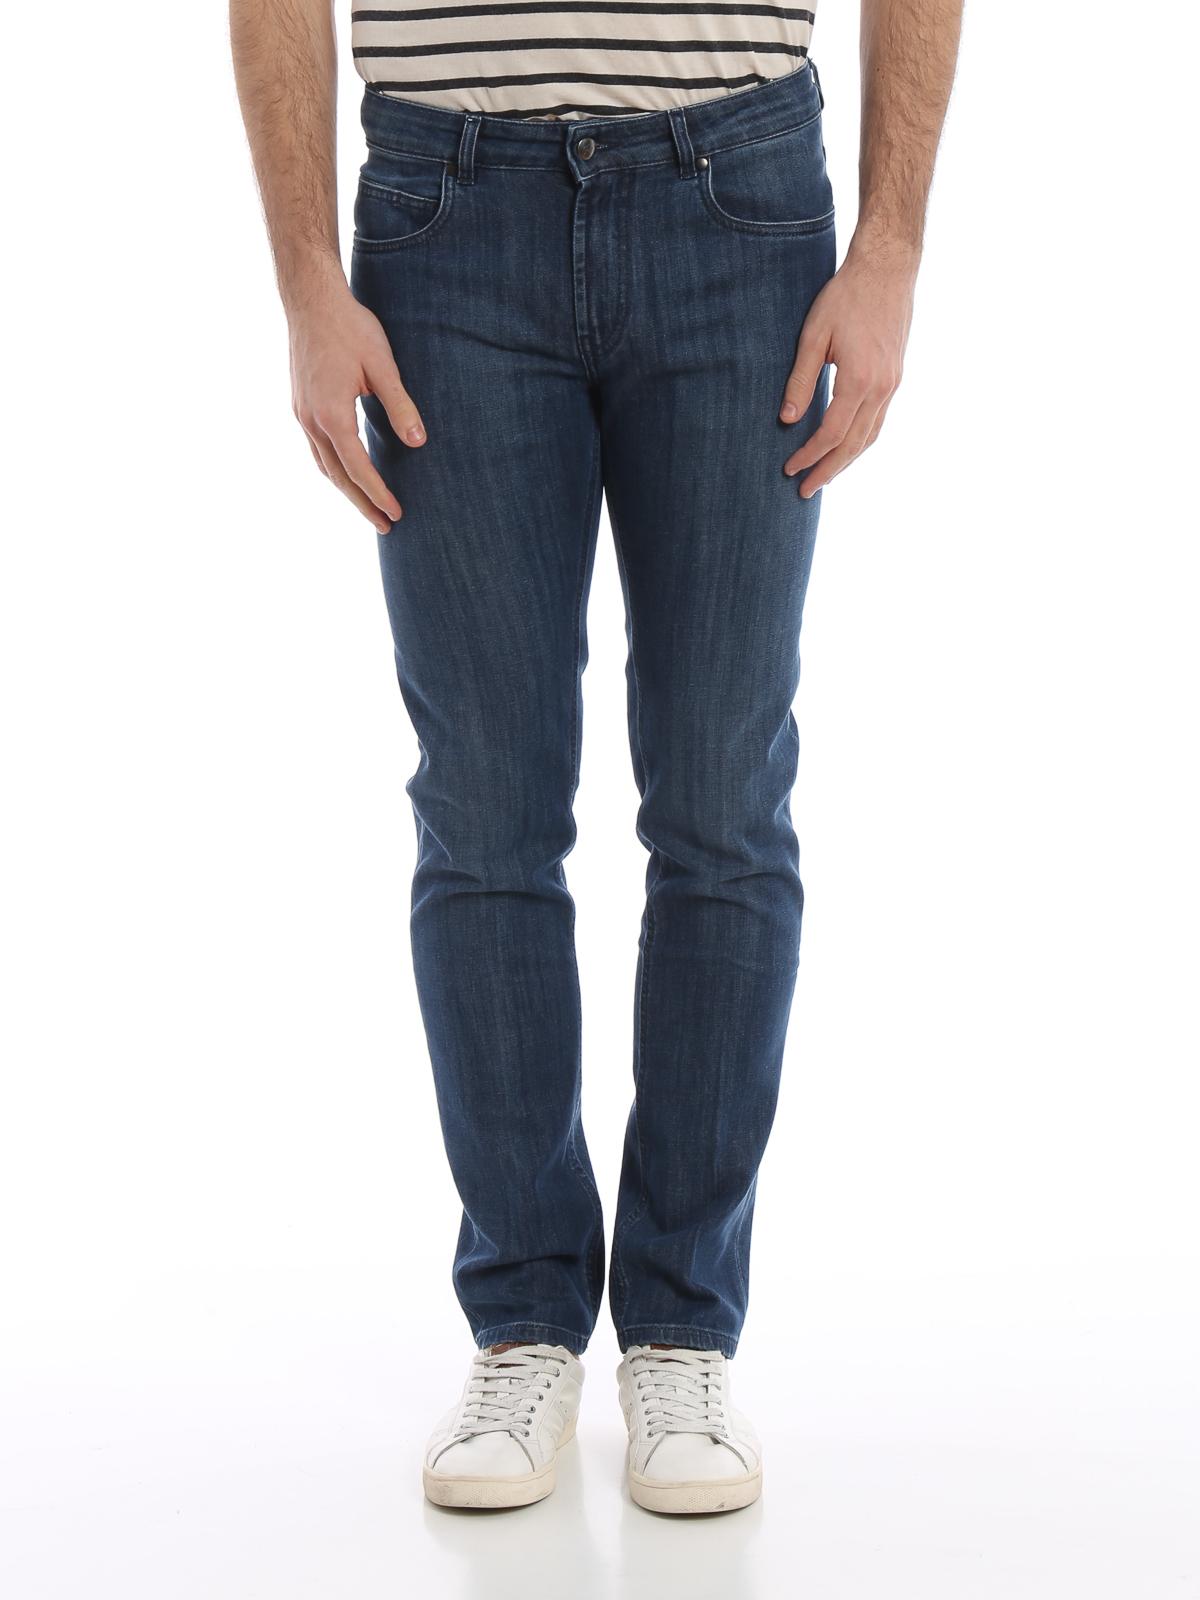 Fay Denim Five Pocket Slim Jeans in Dark Wash (Blue) for Men - Lyst